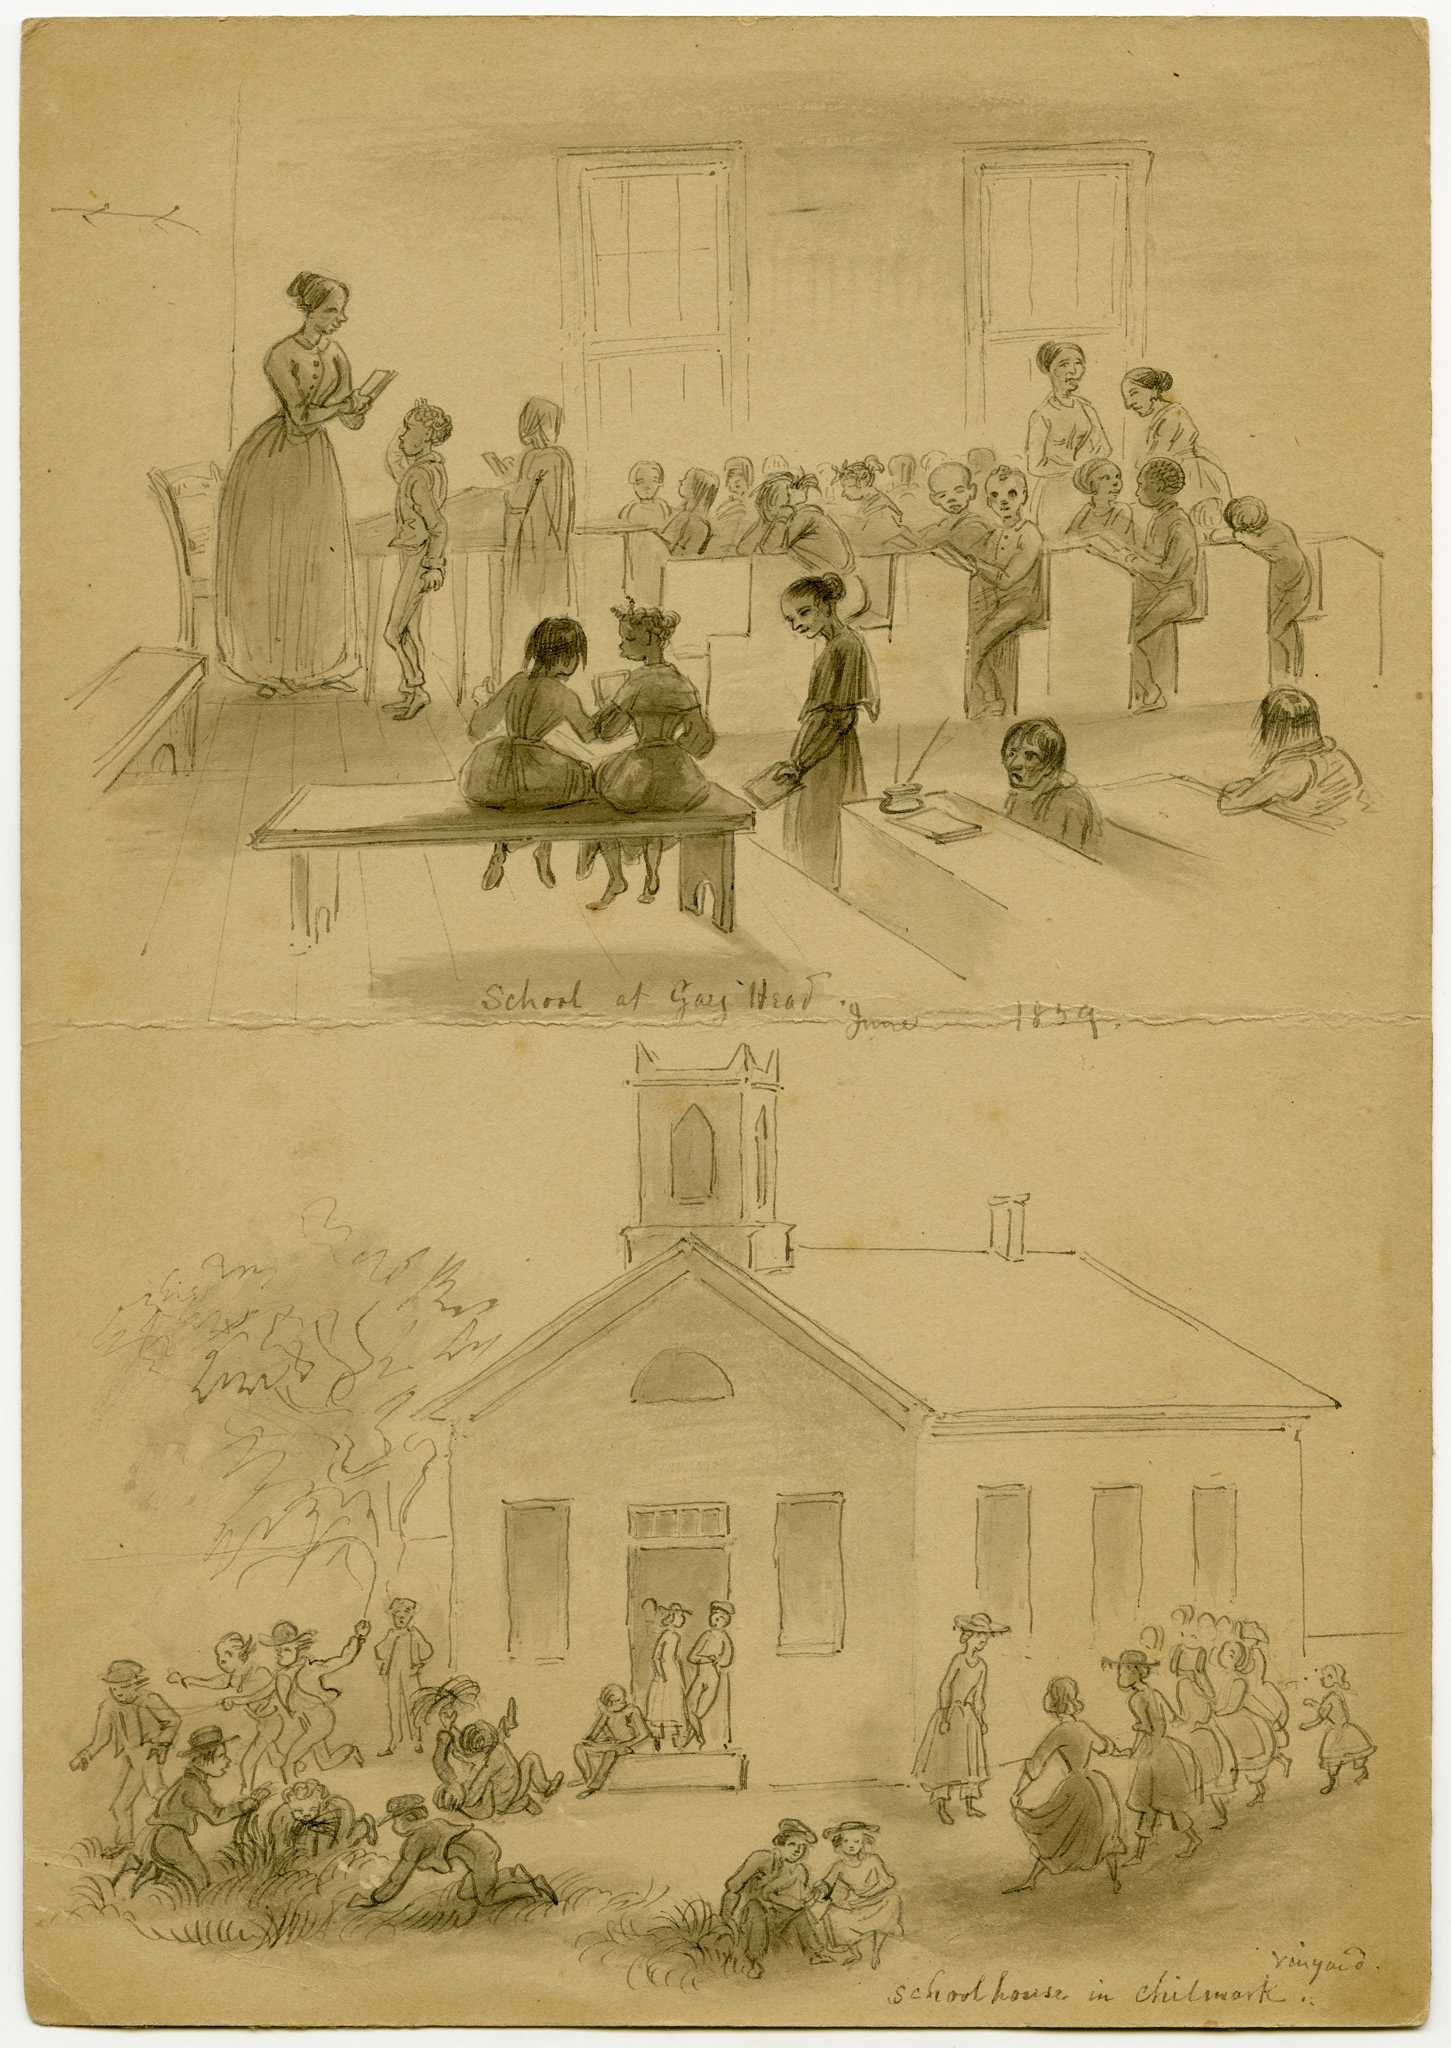 Illustration of school in Gay Head, Massachusetts